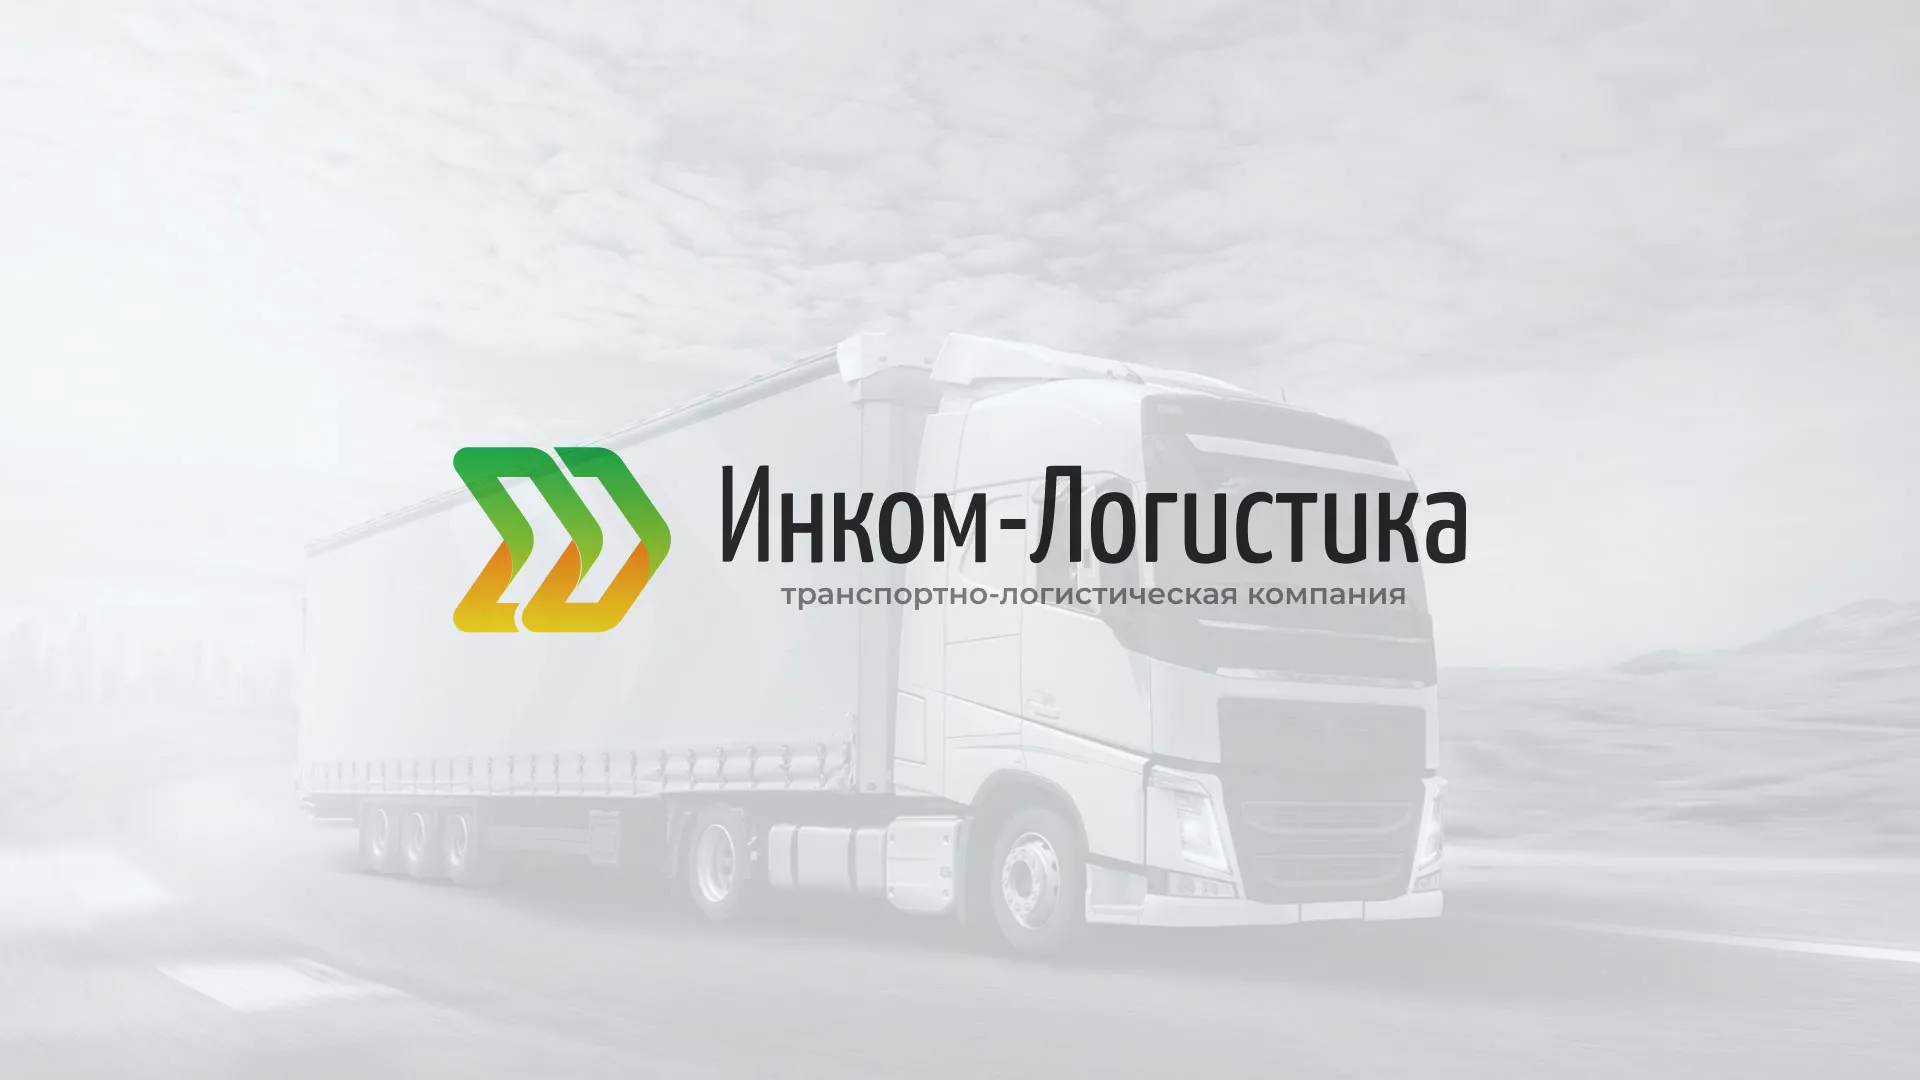 Разработка логотипа и сайта компании «Инком-Логистика» в Чебоксарах